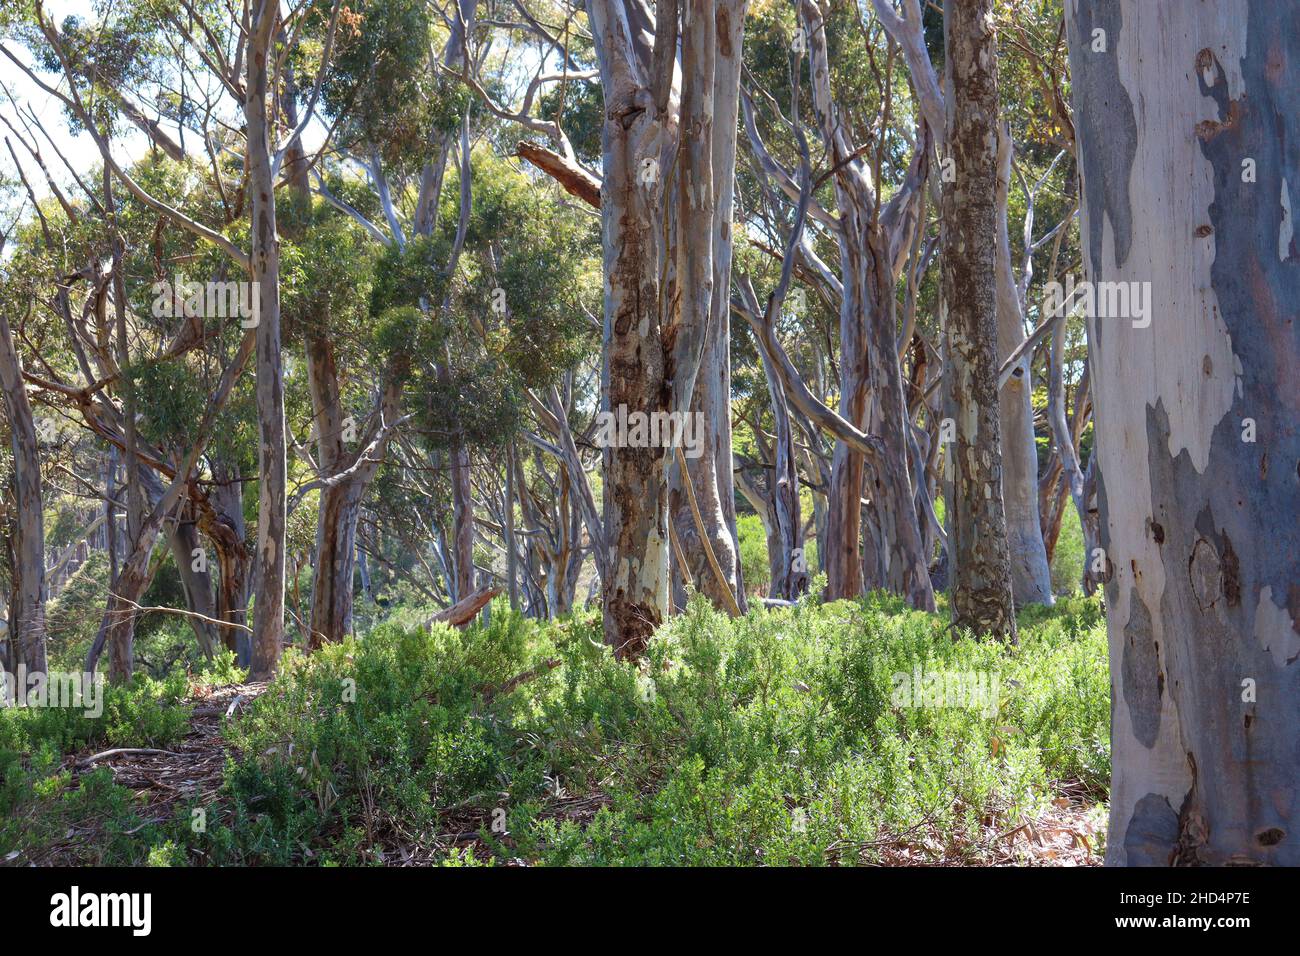 Bushland with eucalyptus trees in Australia Stock Photo